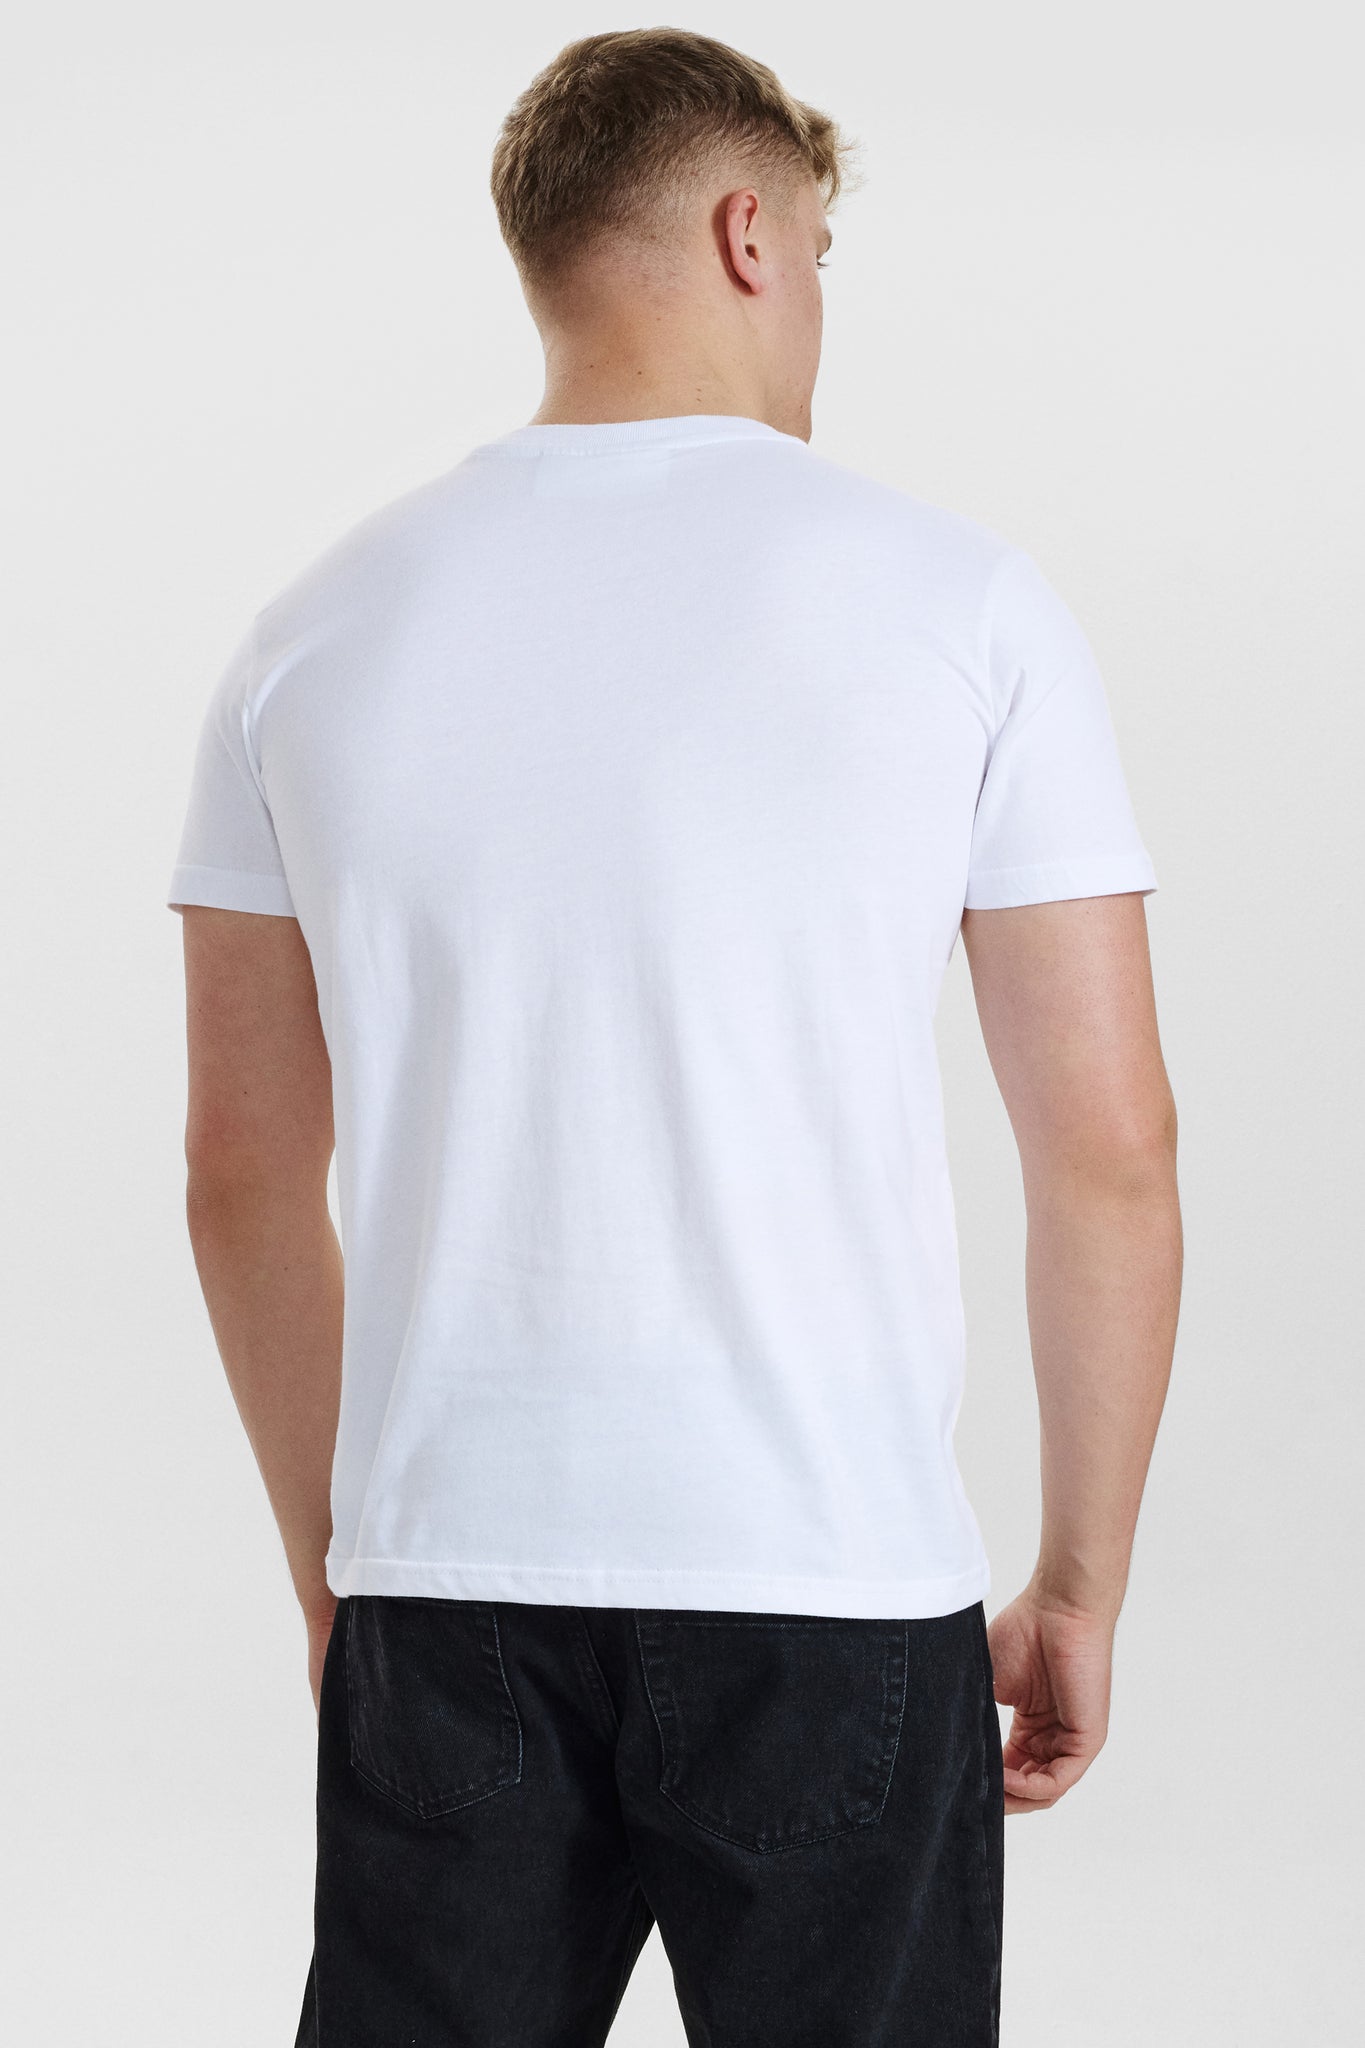 DXNMXRK. DX-Albert T-shirt White